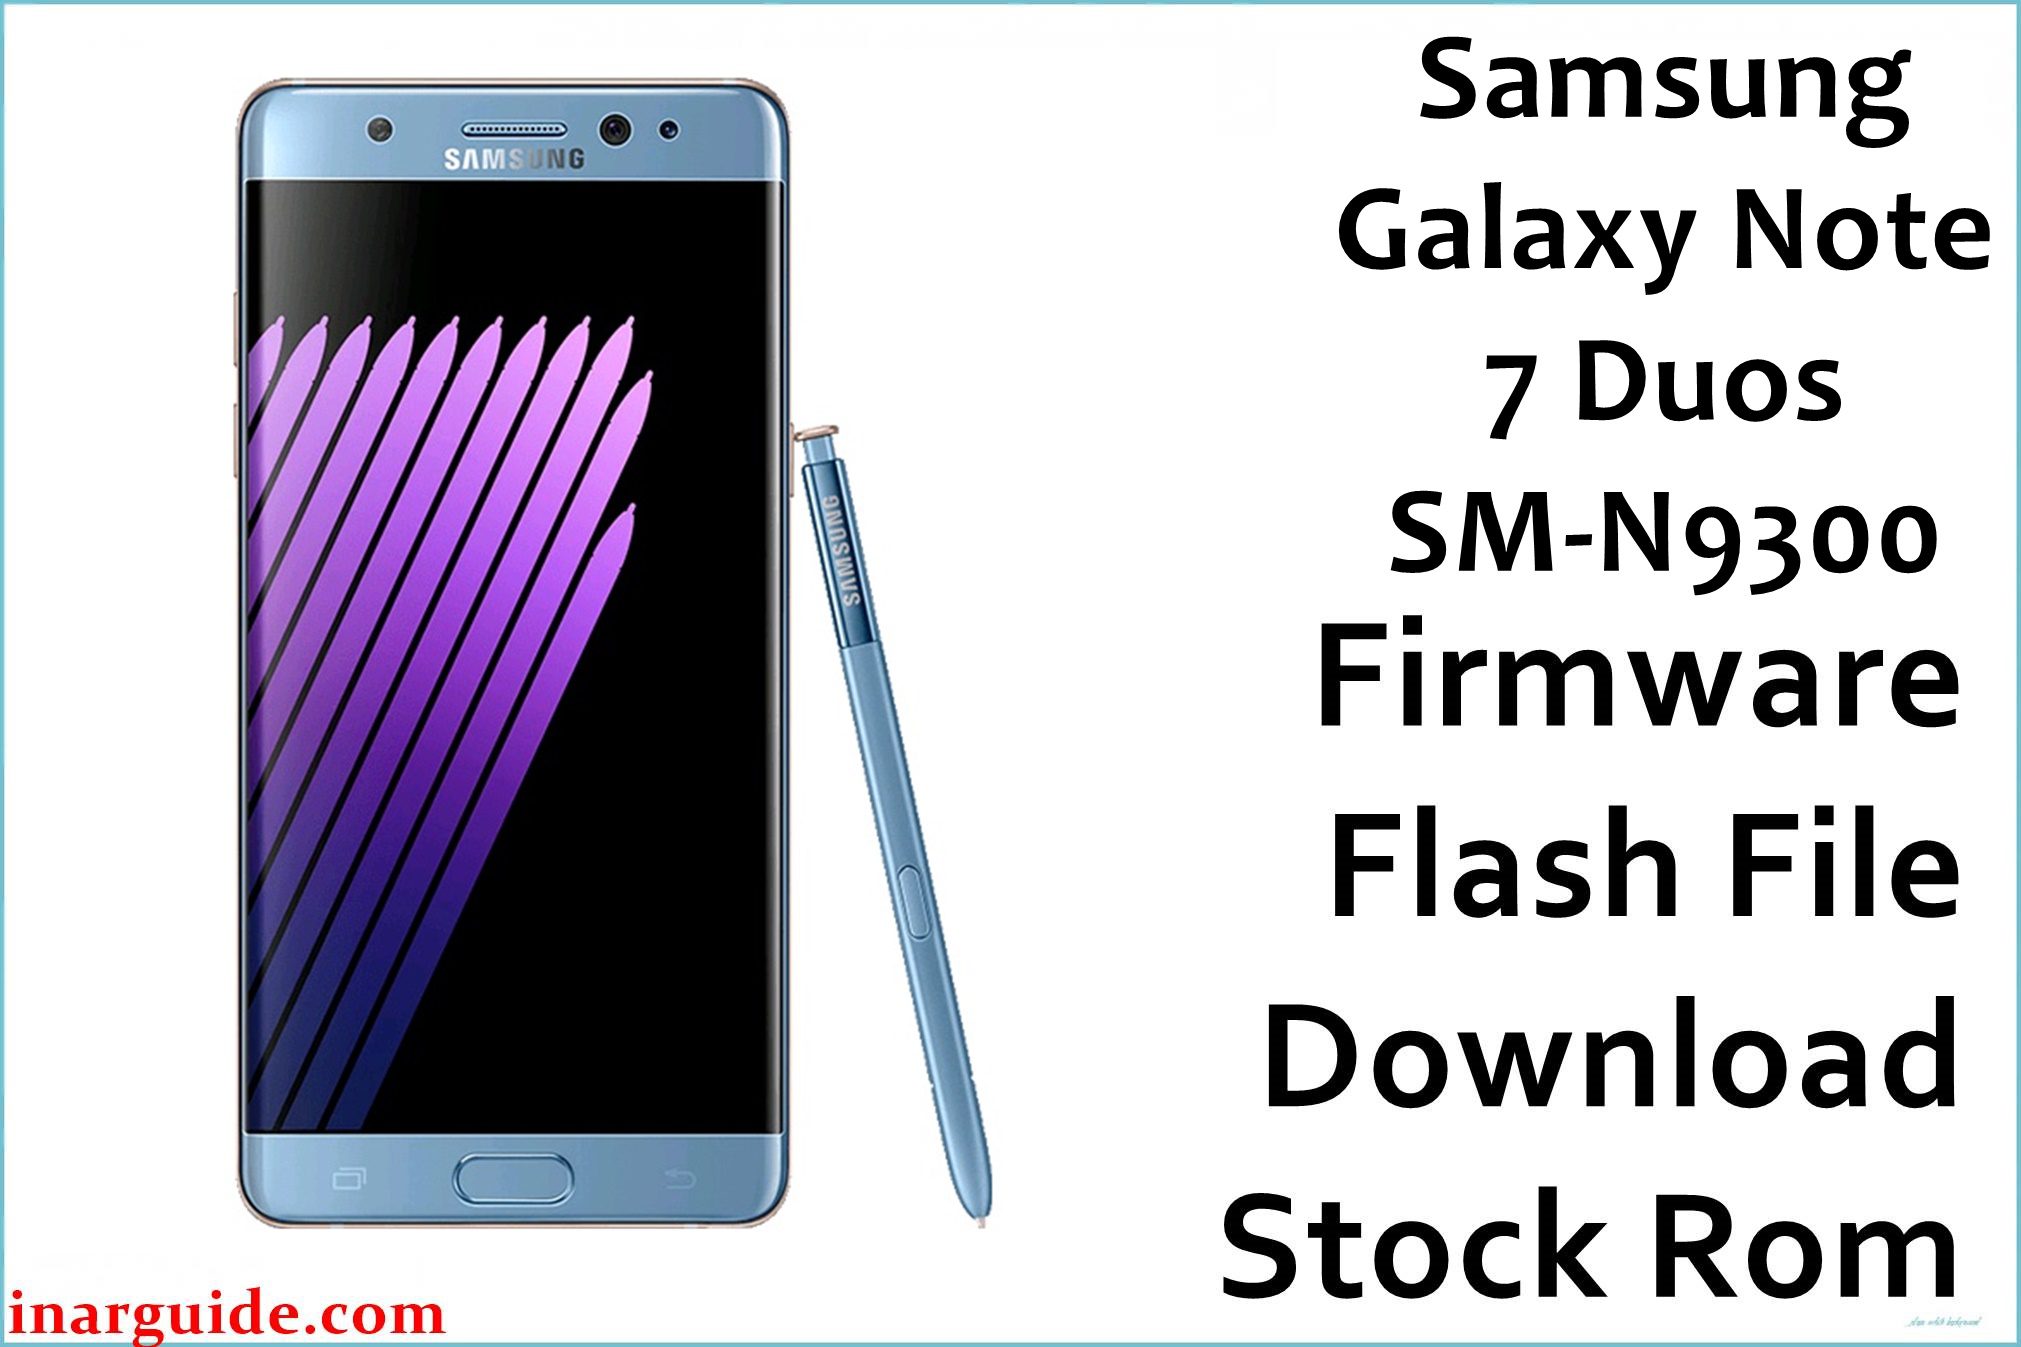 Samsung Galaxy Note 7 Duos SM N9300